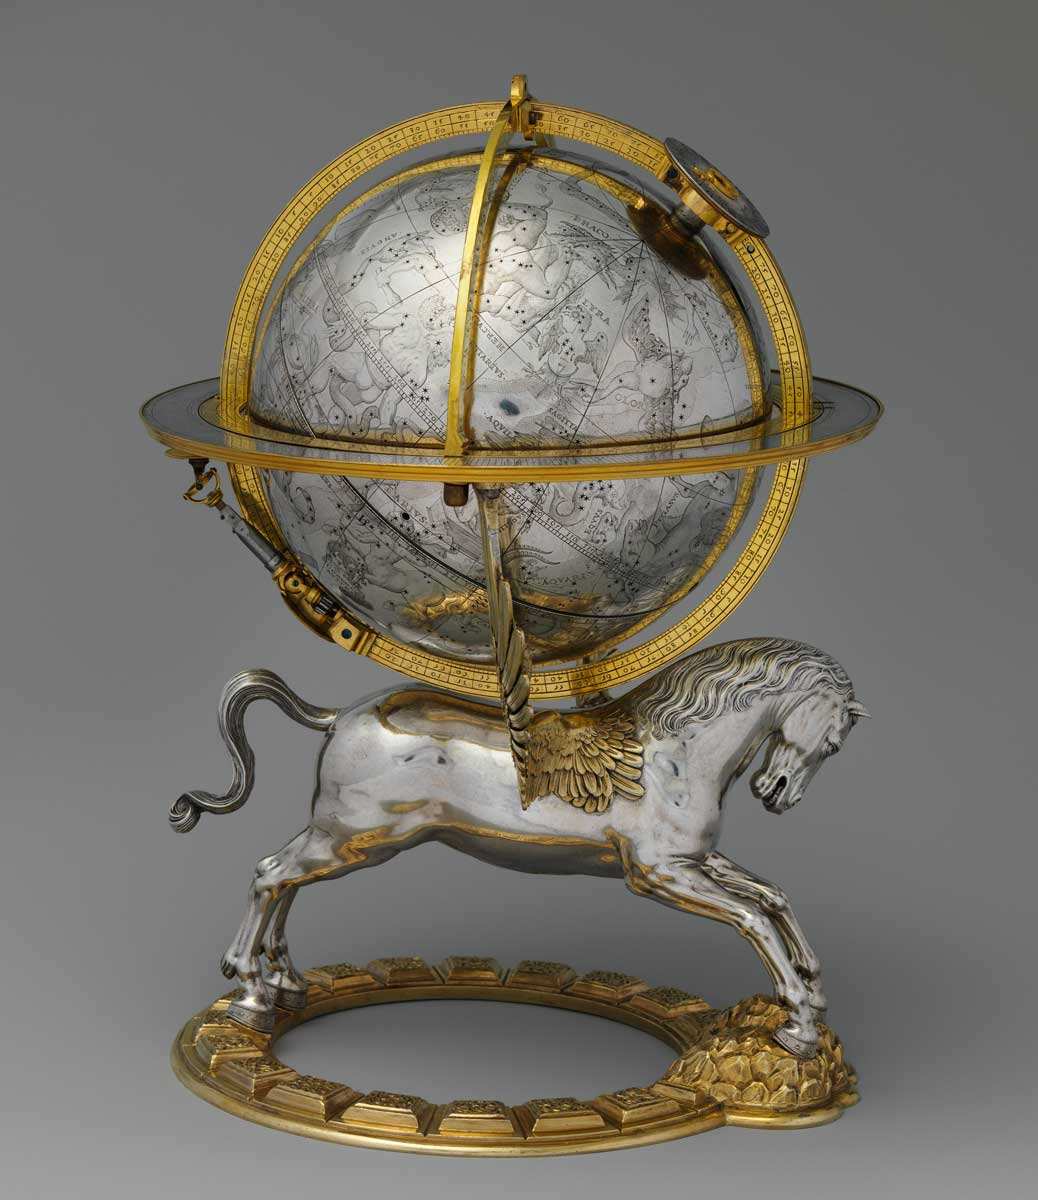 celestial globe with clockwork